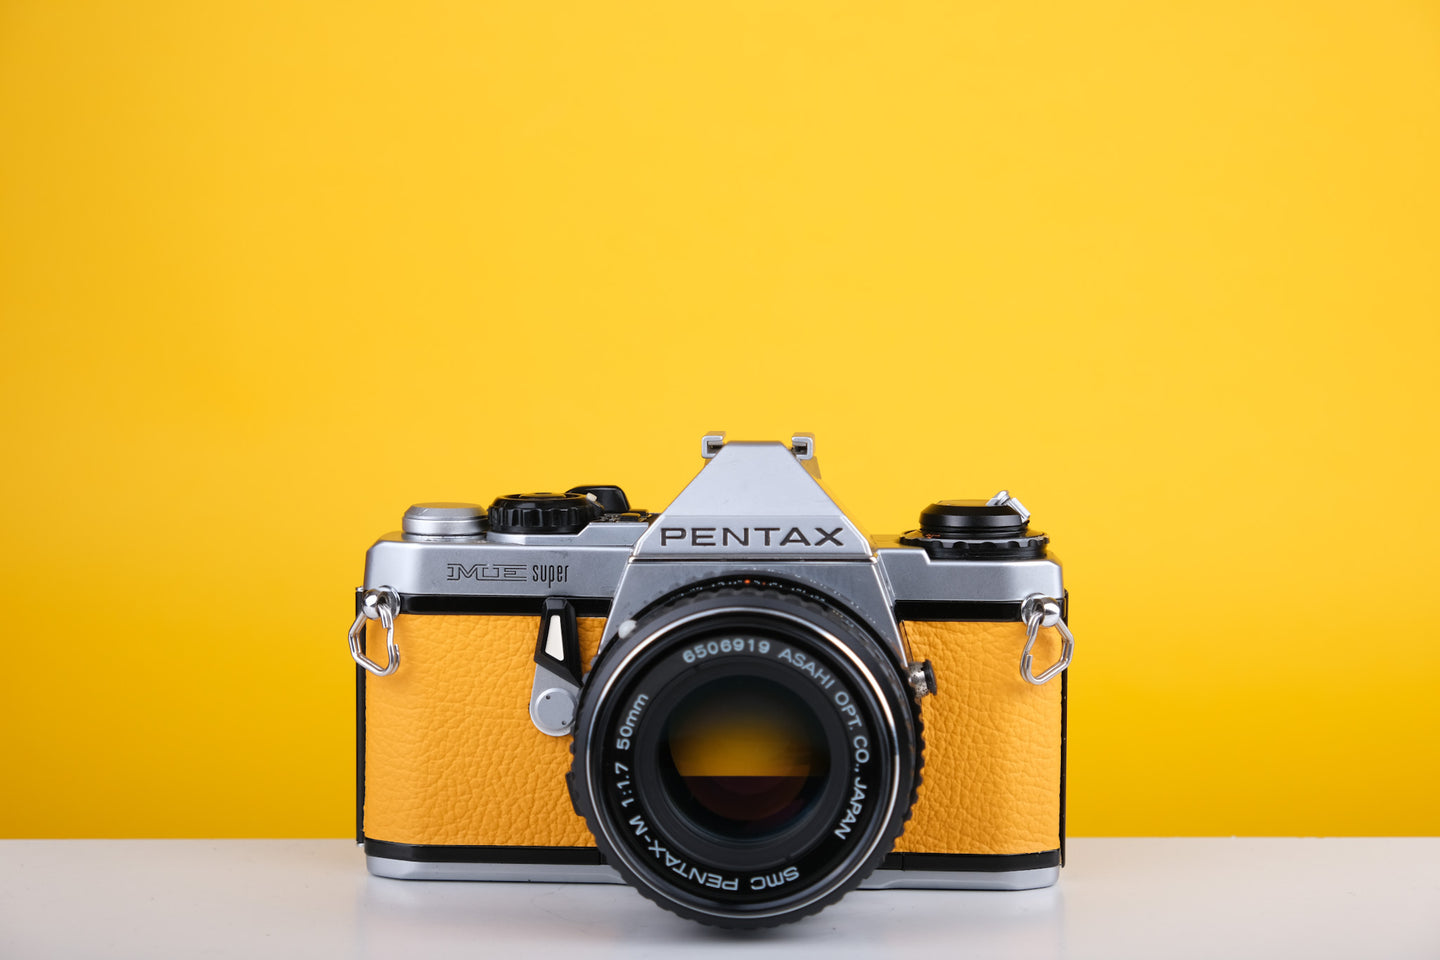 Pentax ME Super 35mm SLR Film Camera with SMC Pentax-M 50mm f1.7 Lens